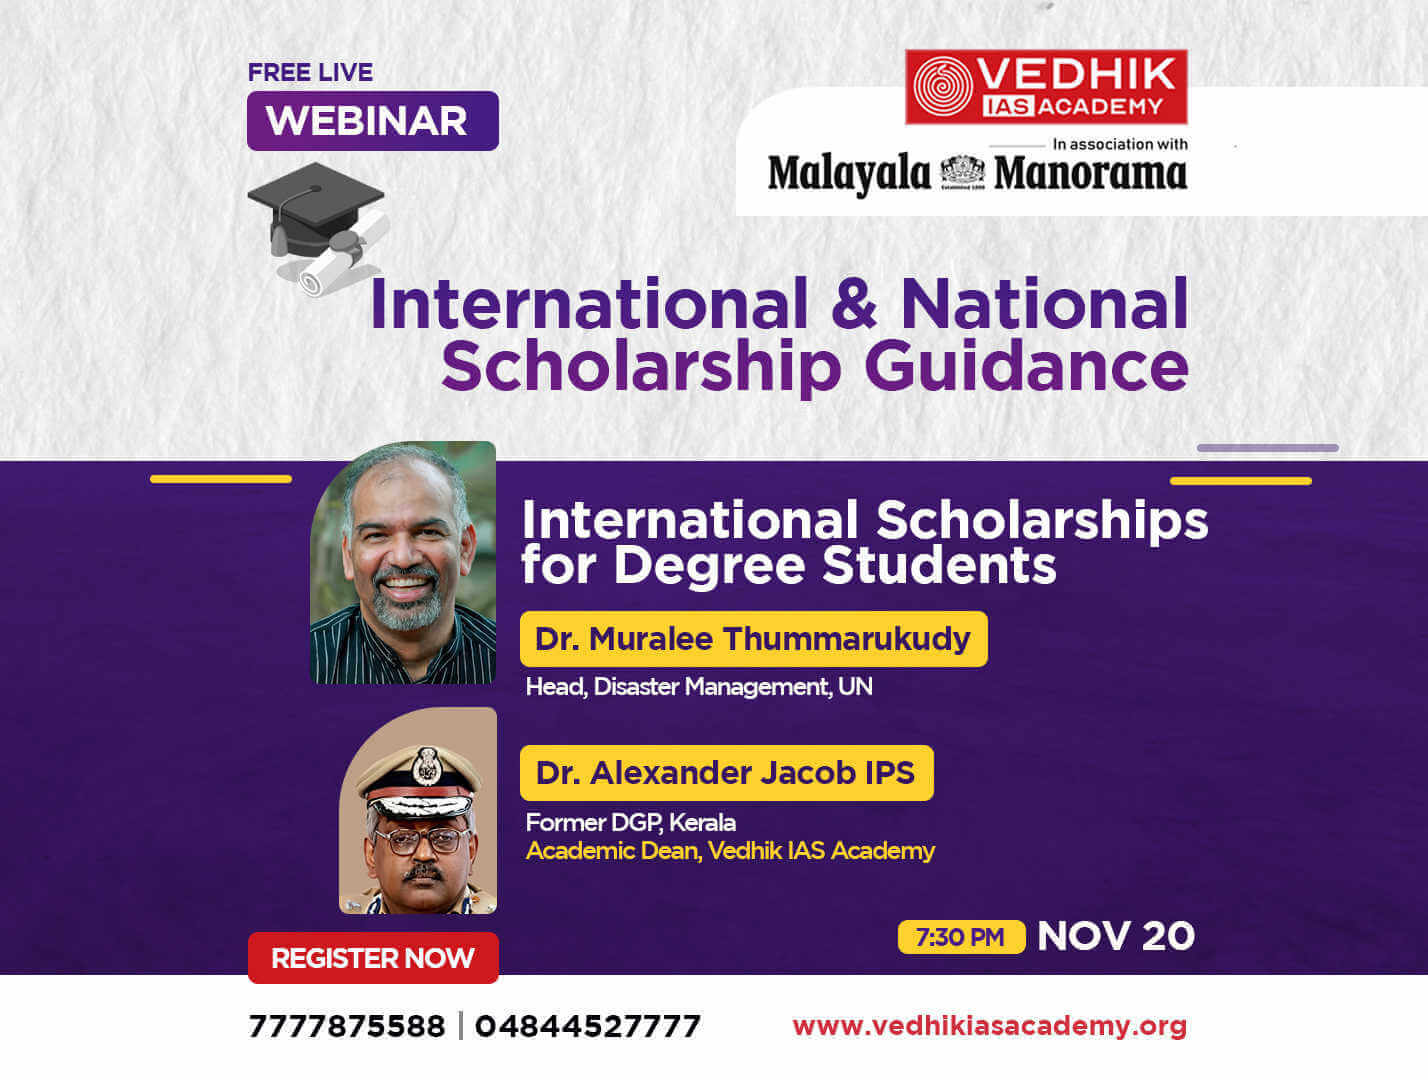 International and national Scholarship guidnace webinar